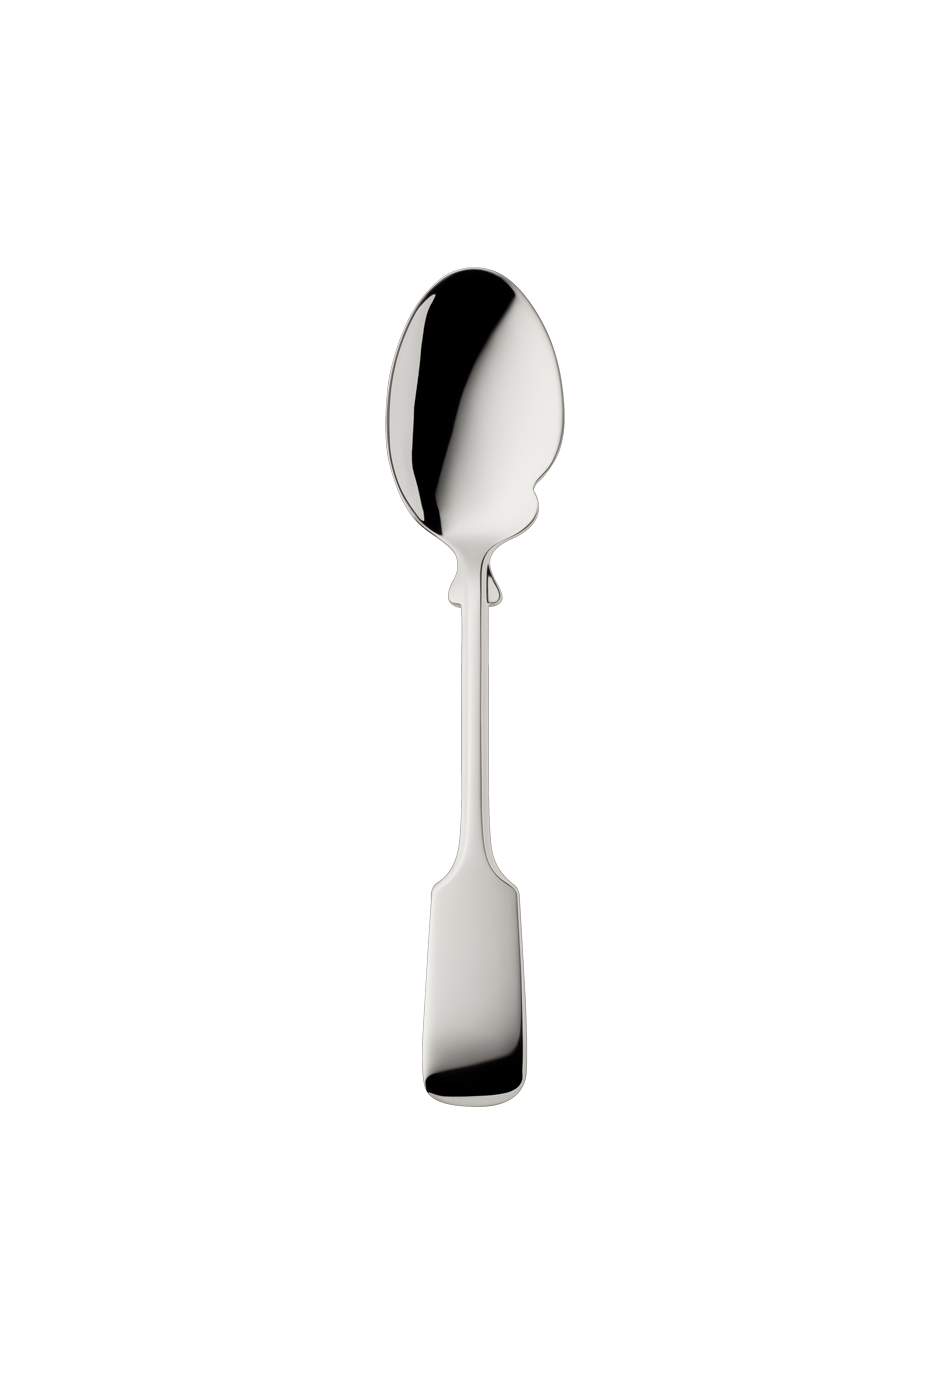 Alt-Spaten Gourmet spoon (150g massive silverplated)